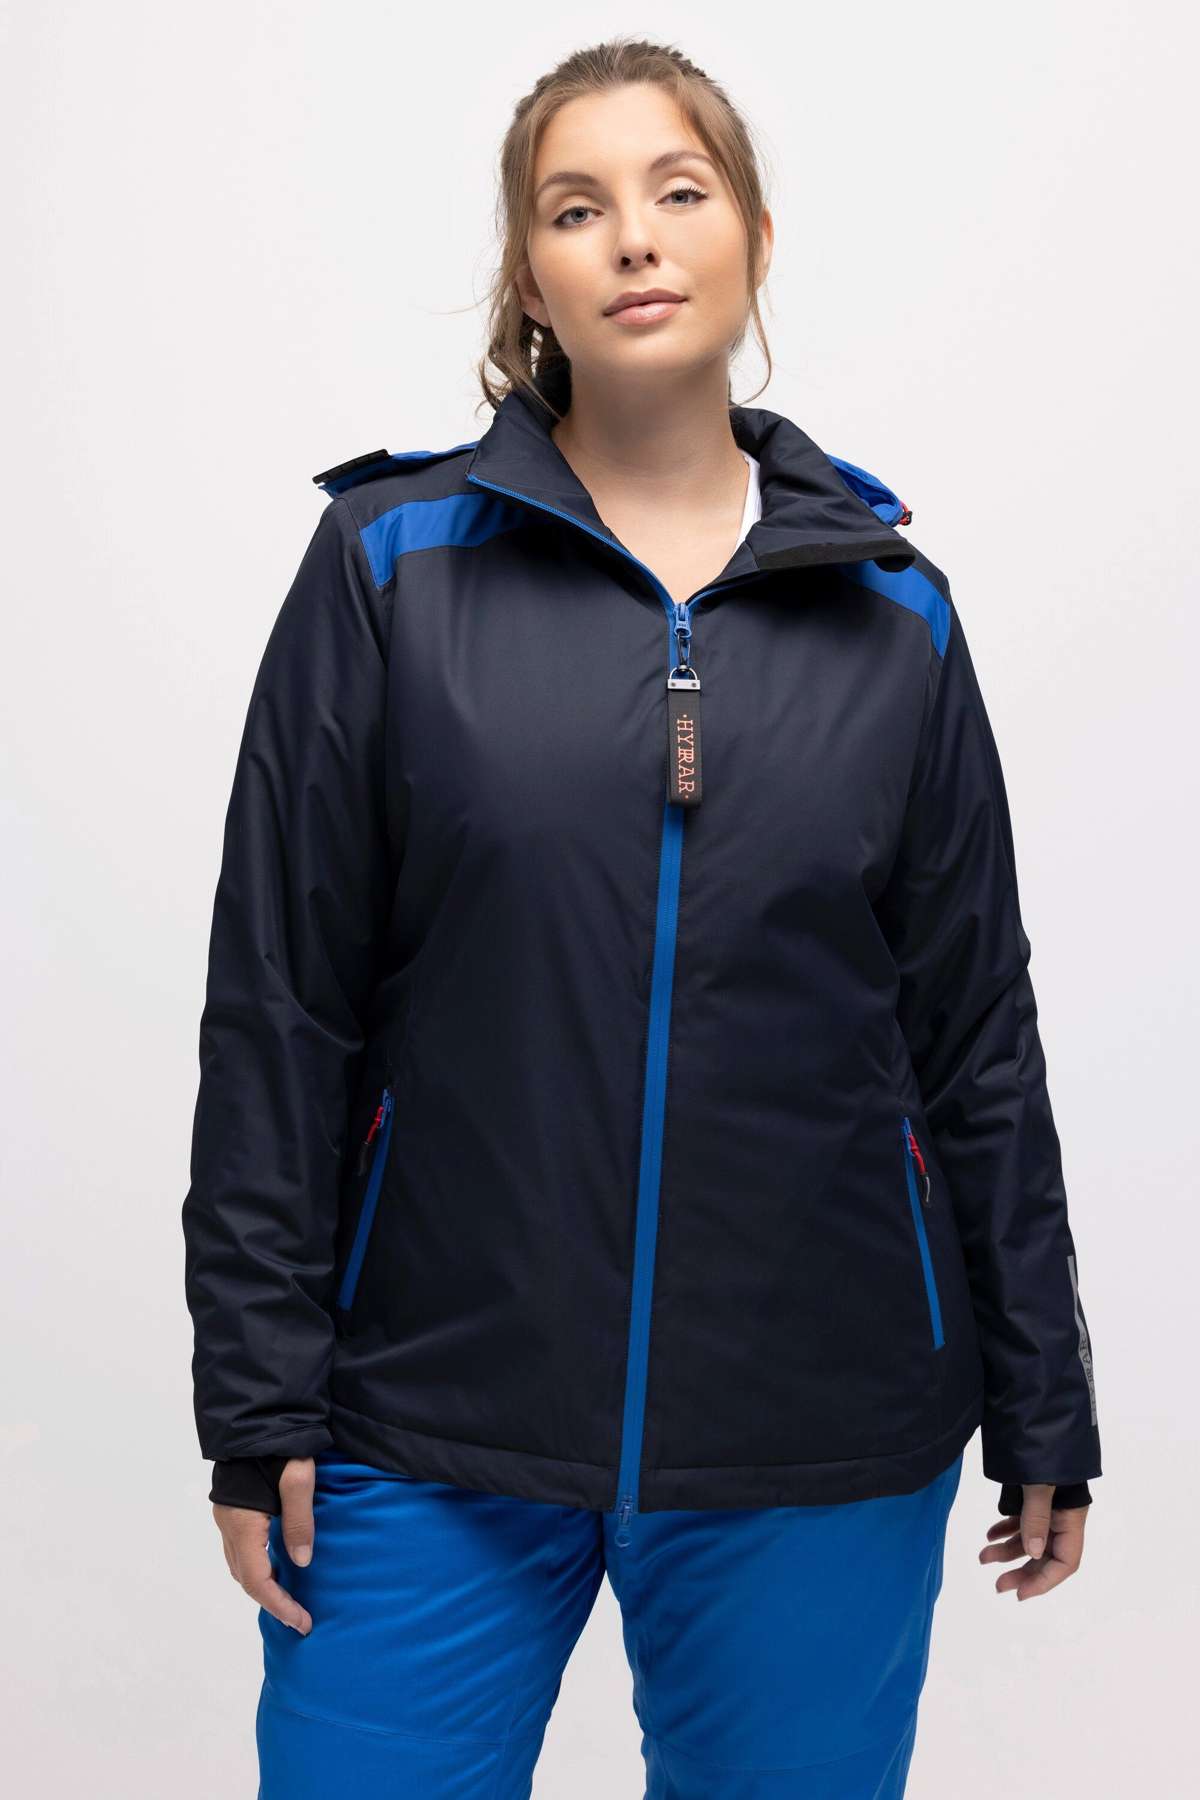 Функциональная куртка HYPRAR Performance Jacket водонепроницаемая двусторонняя молния